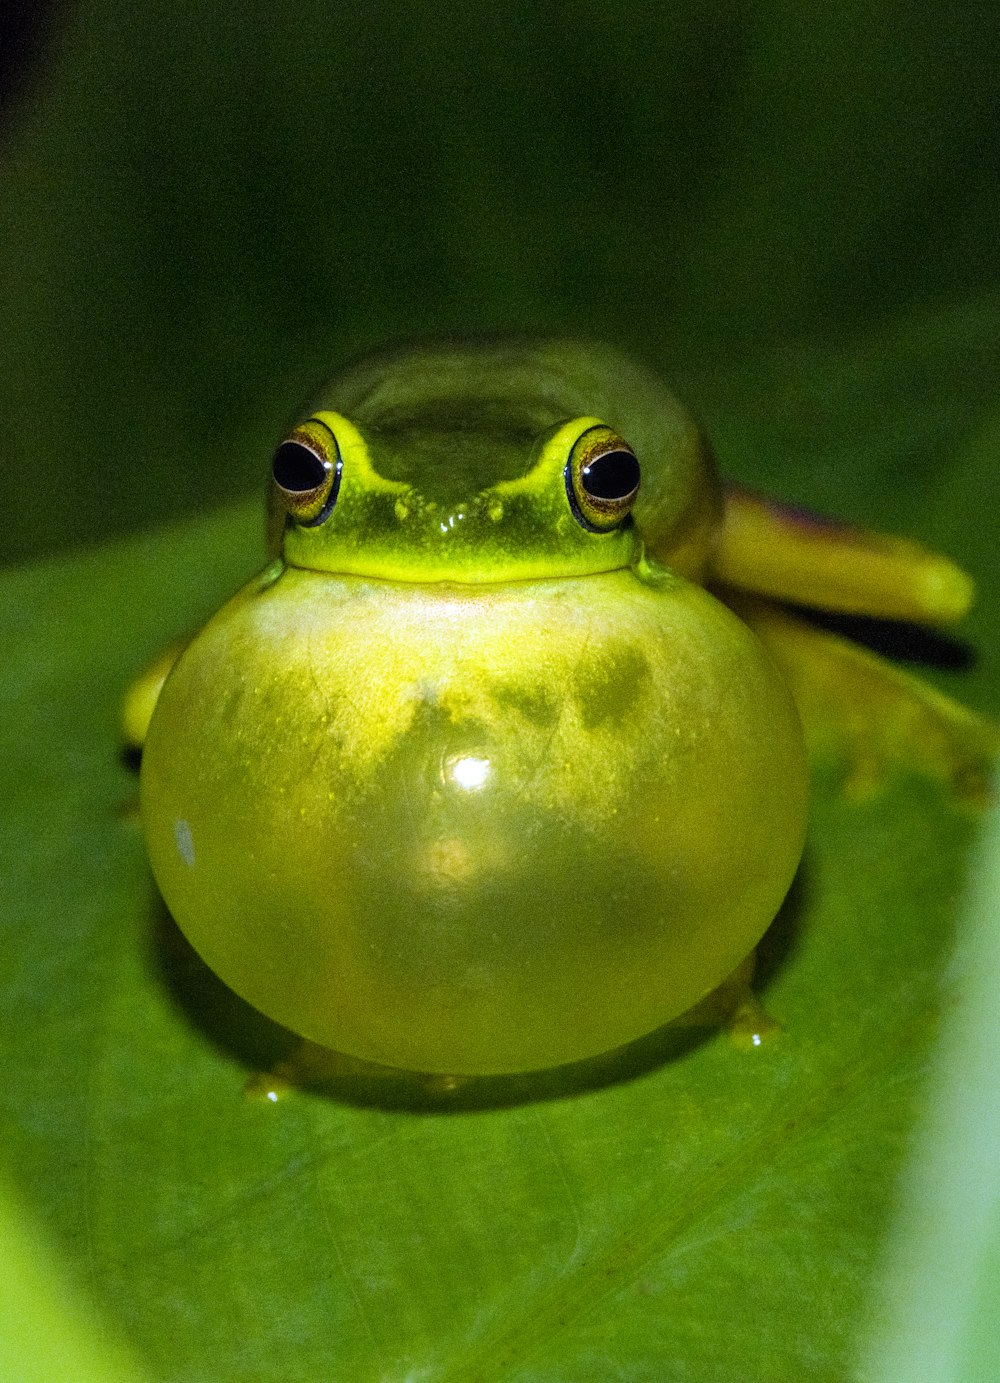 grüner Frosch auf grünem Blatt